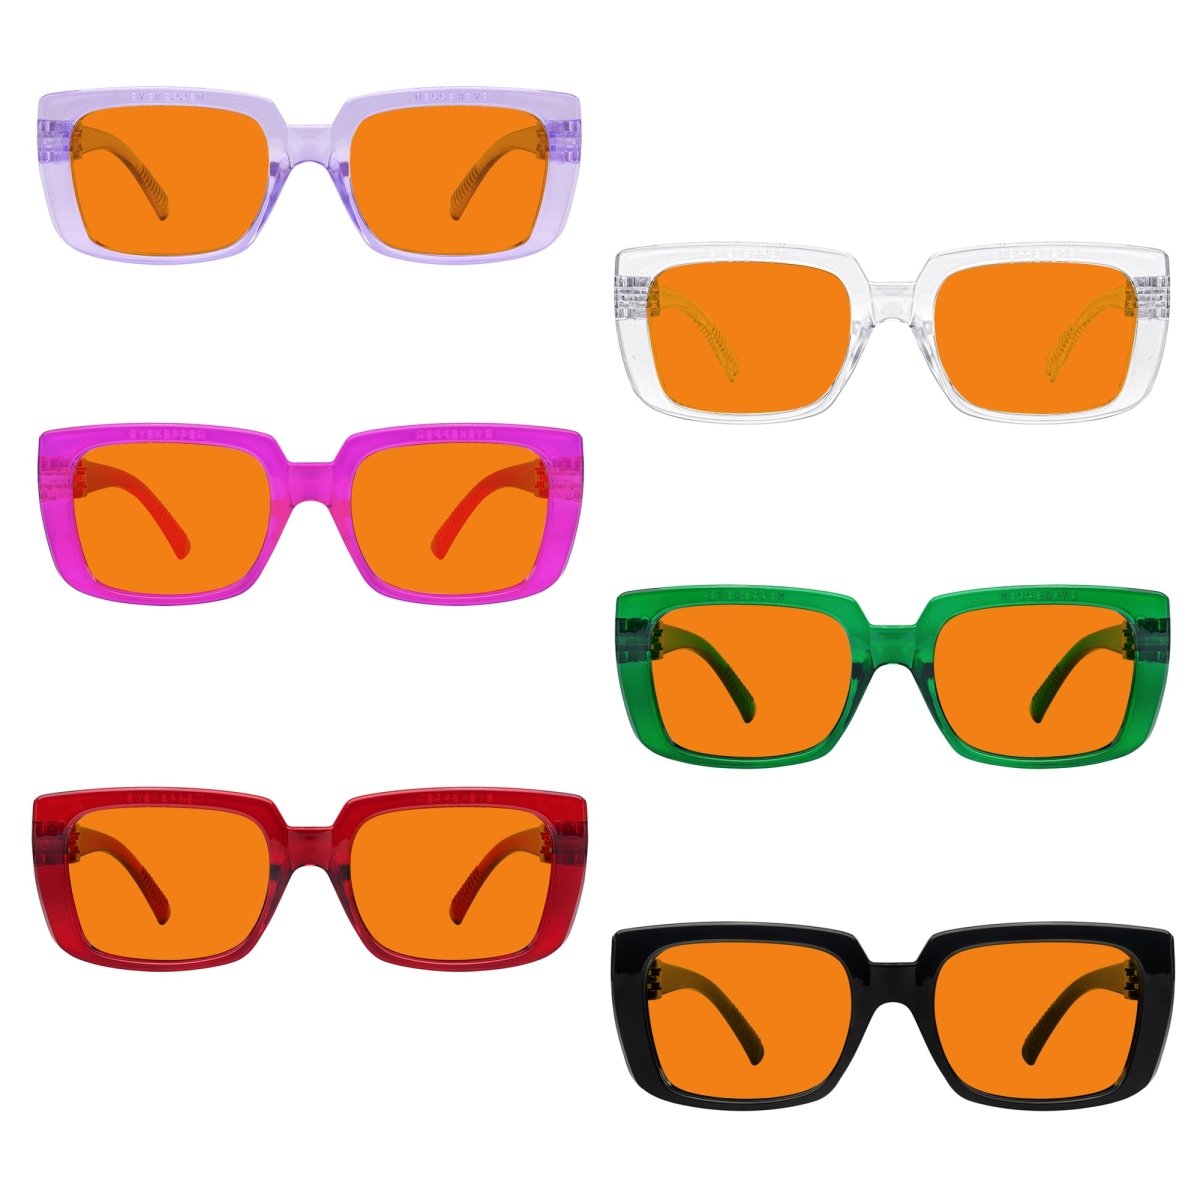 6 Pack 100% Blue Light Blocking Glasses Orange Lens Metalless Screwless NR9107 - B98eyekeeper.com